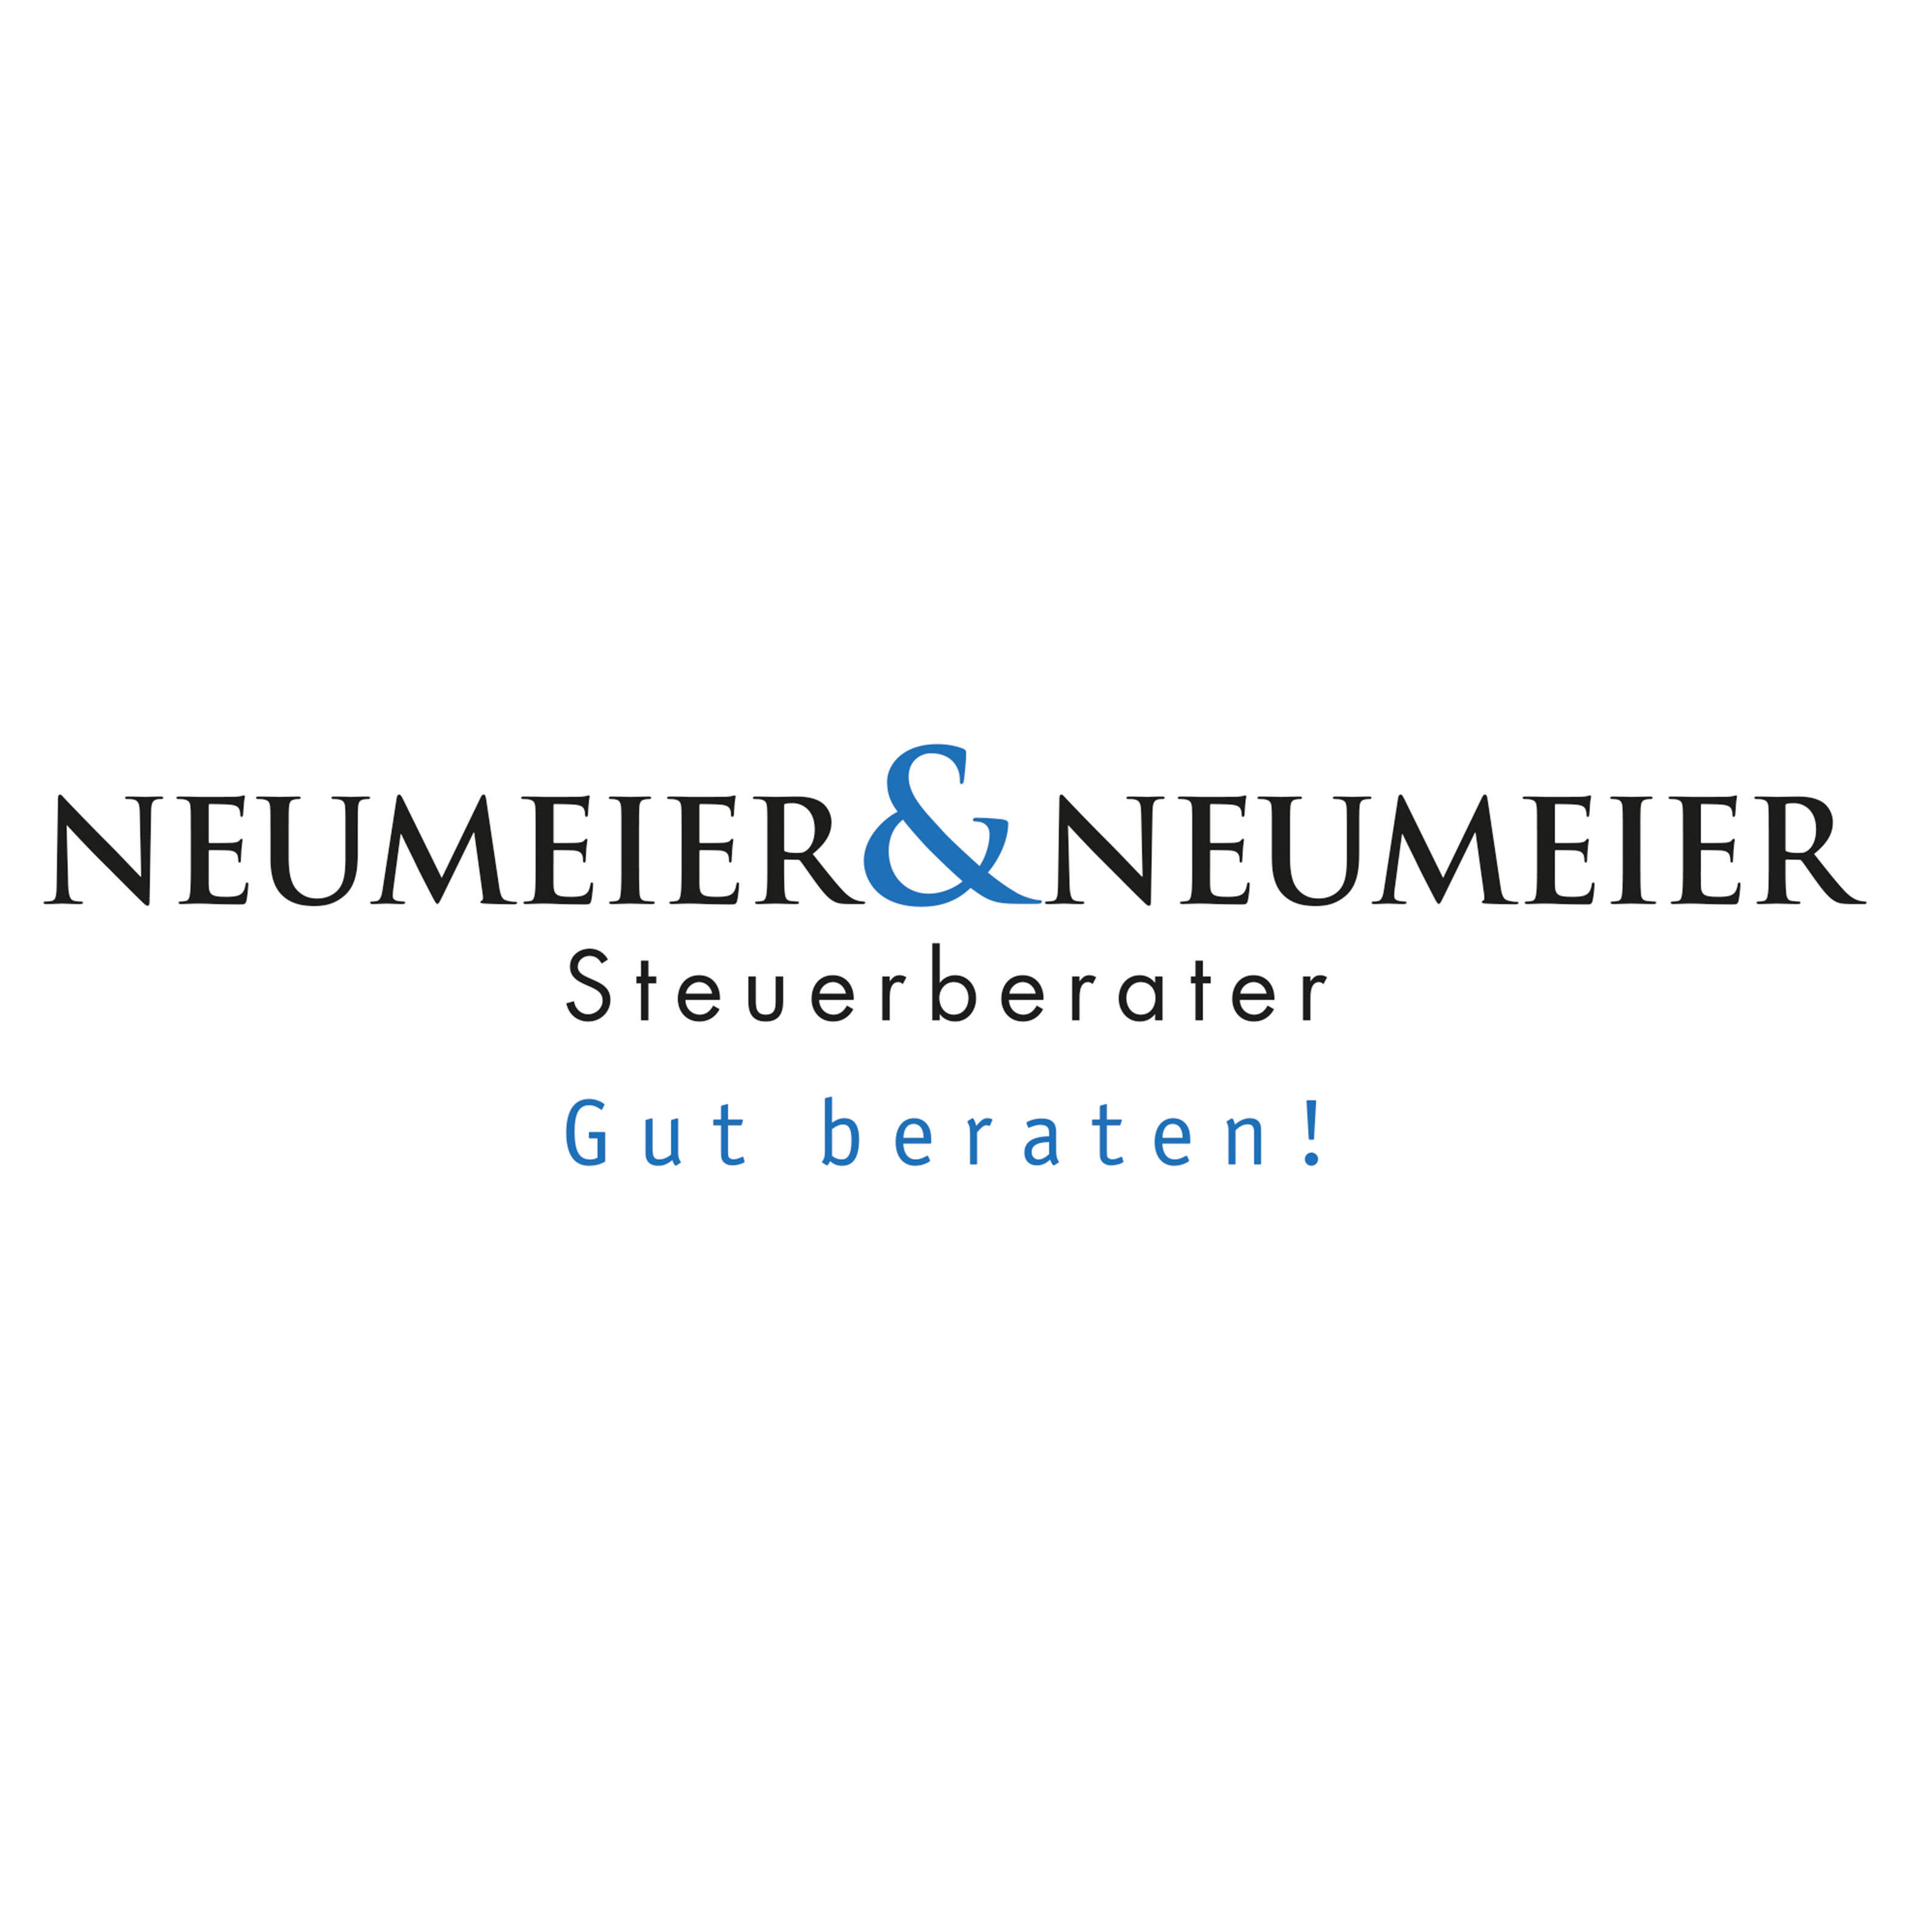 Neumeier André u. Ersnt-Jürgen Steuerberatung Frankfurt 069 7191570